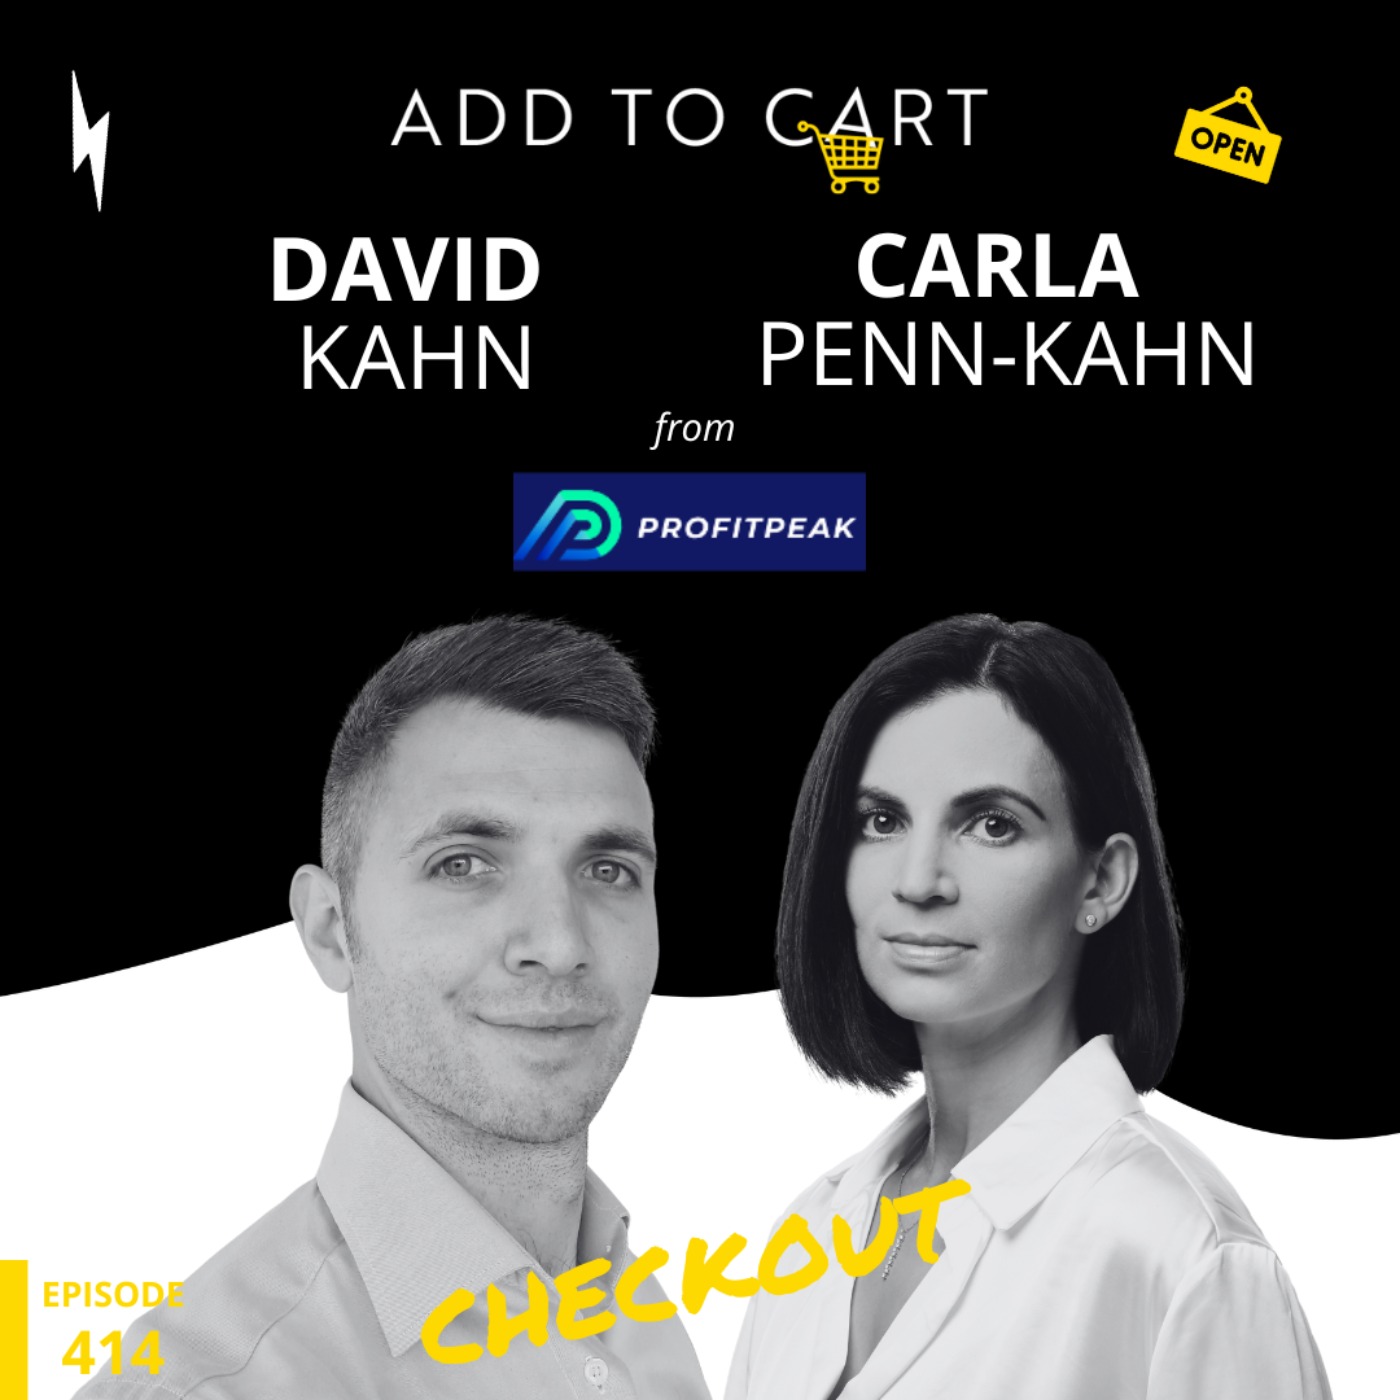 Carla Penn-Kahn and David Kahn from ProfitPeak | Checkout #414